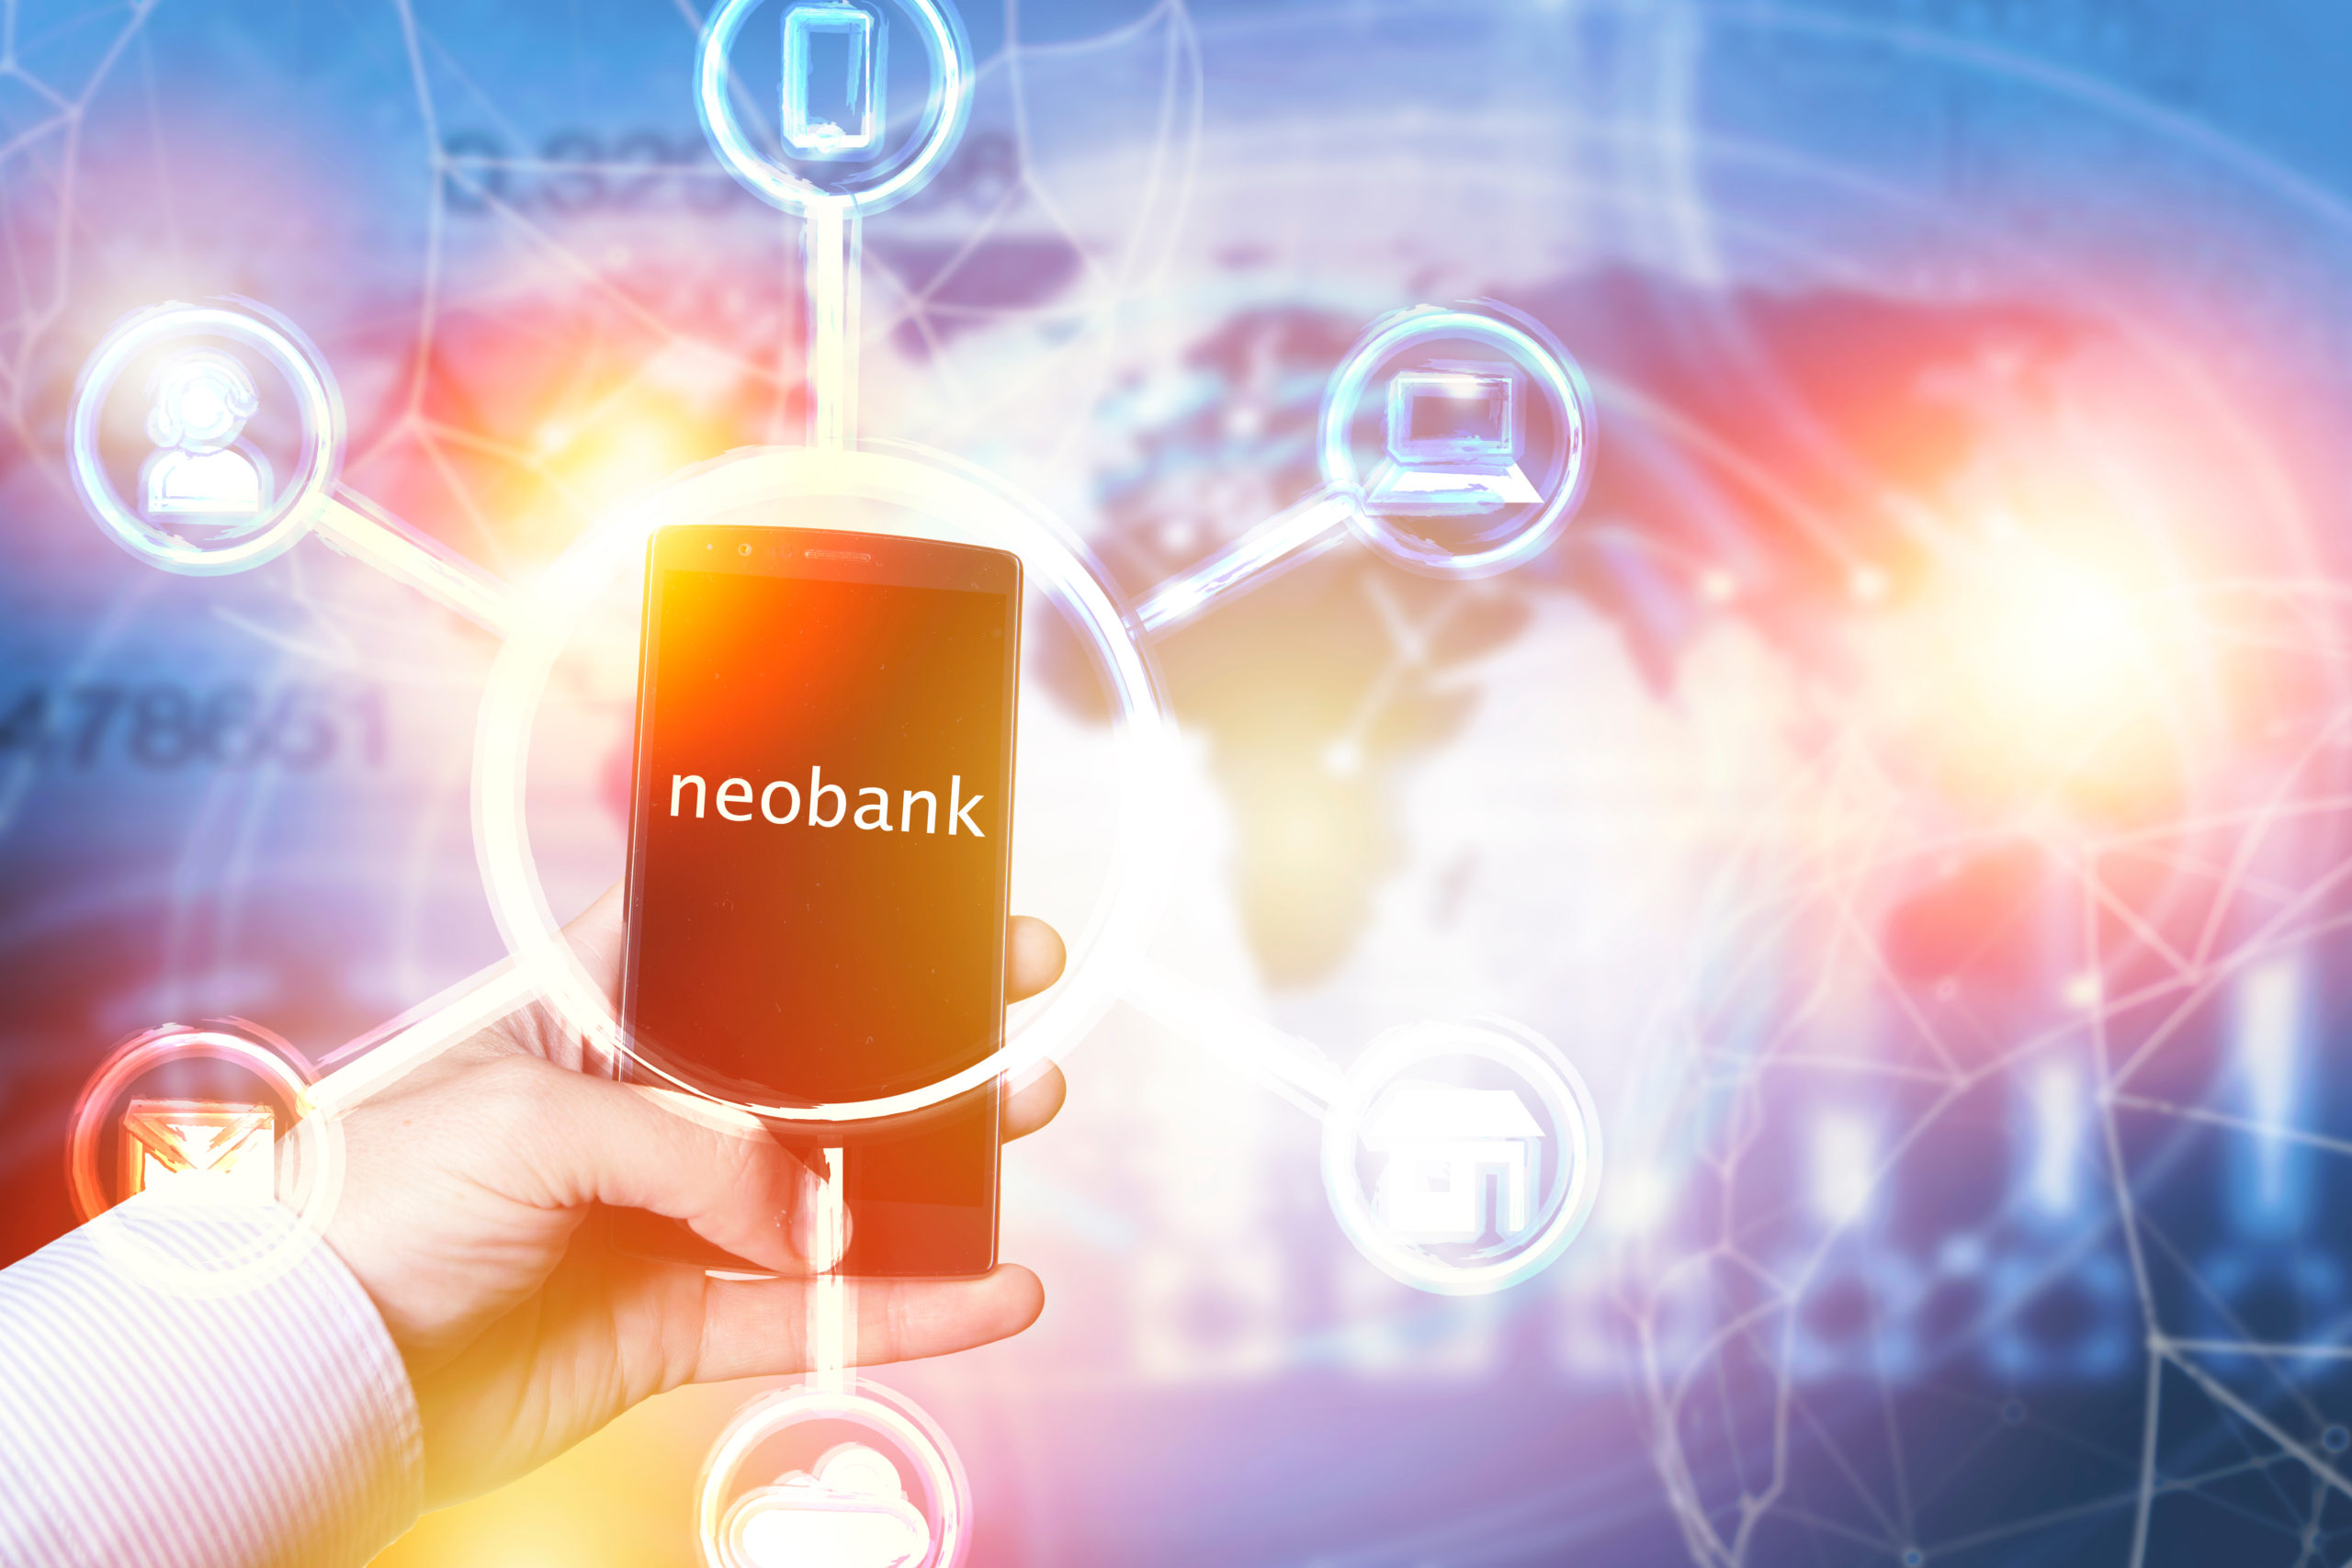 SME-focused neobank Open raises USD 100 million round led by Temasek